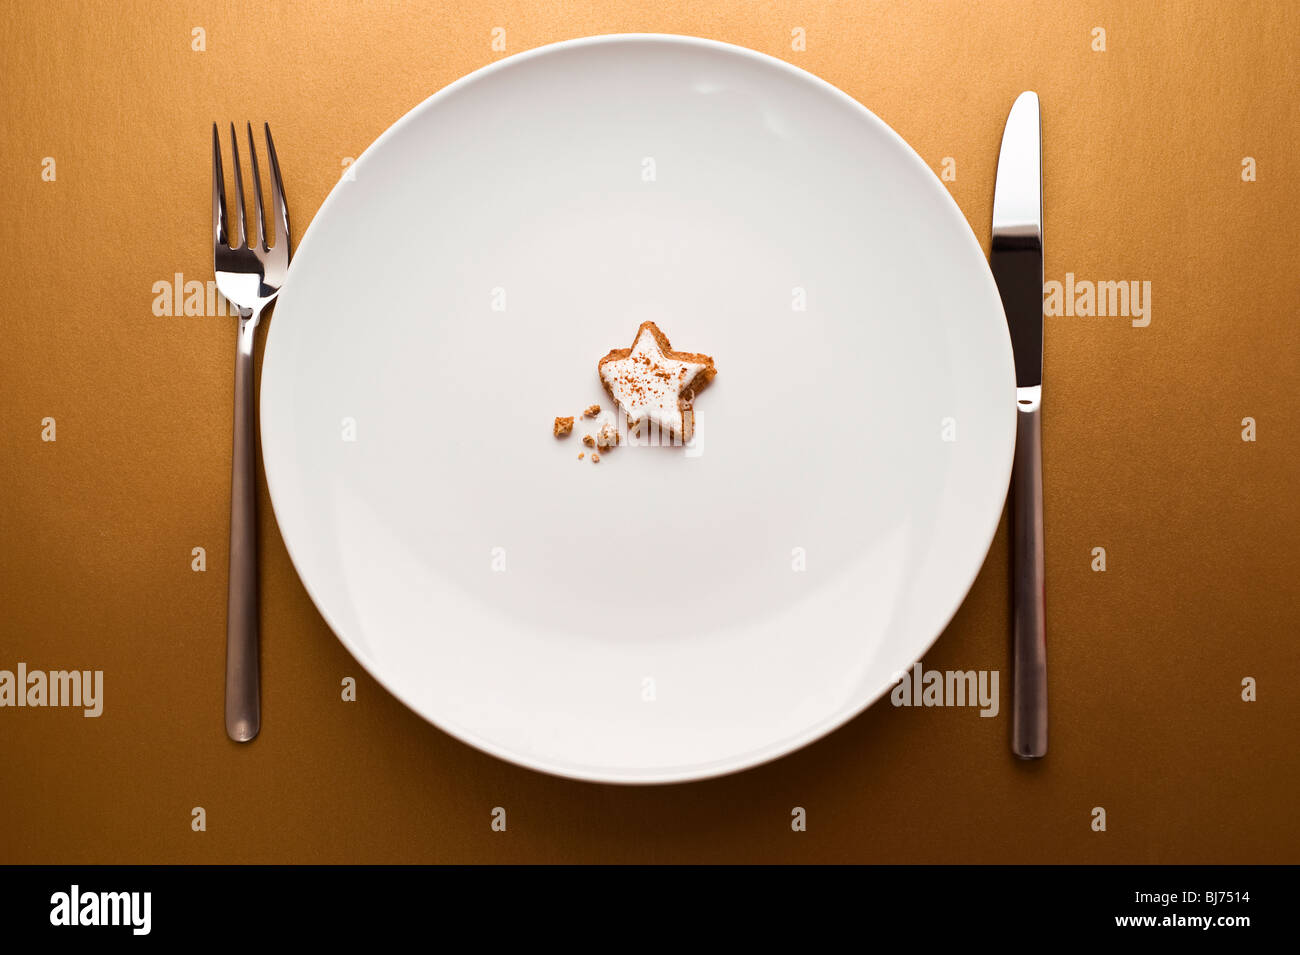 glazed nut cookie on dish on gold background Stock Photo